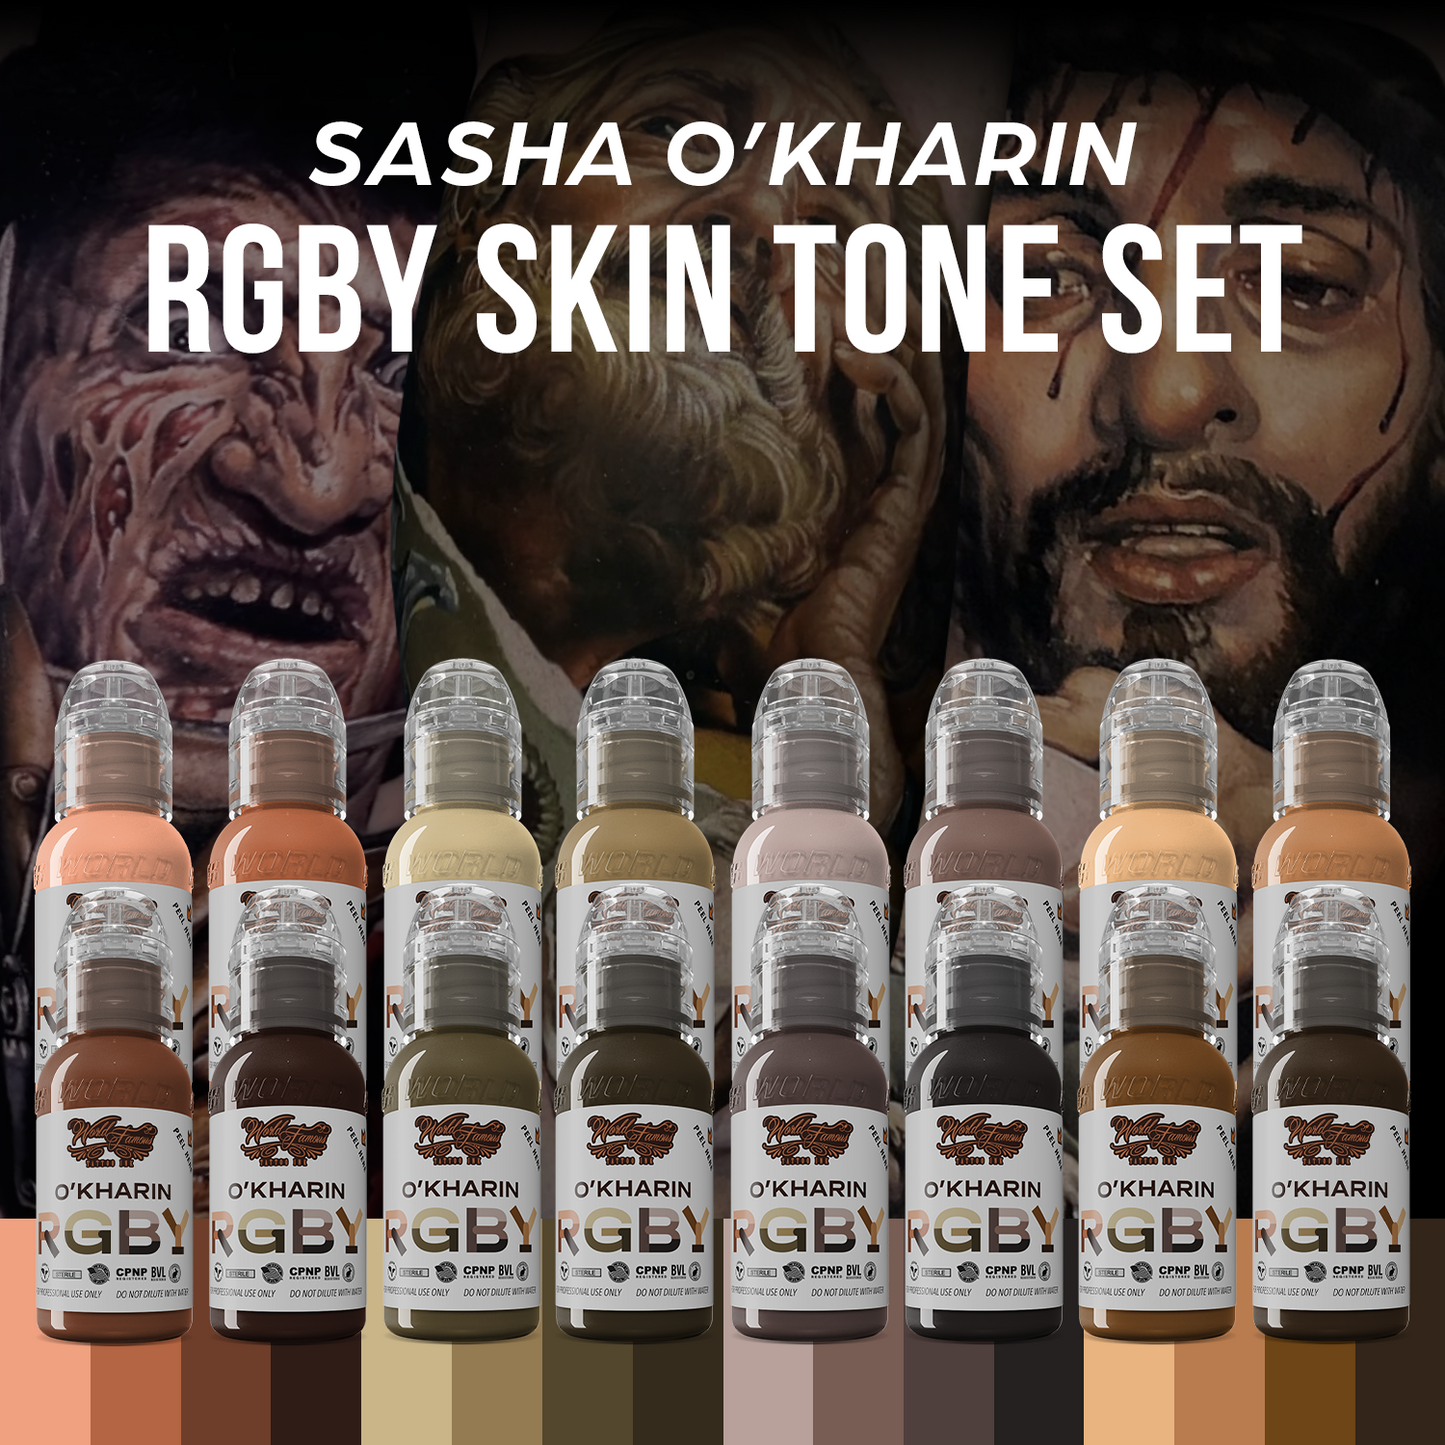 WORLD FAMOUS Sasha O'Kharin RGBY Skin Tone Set